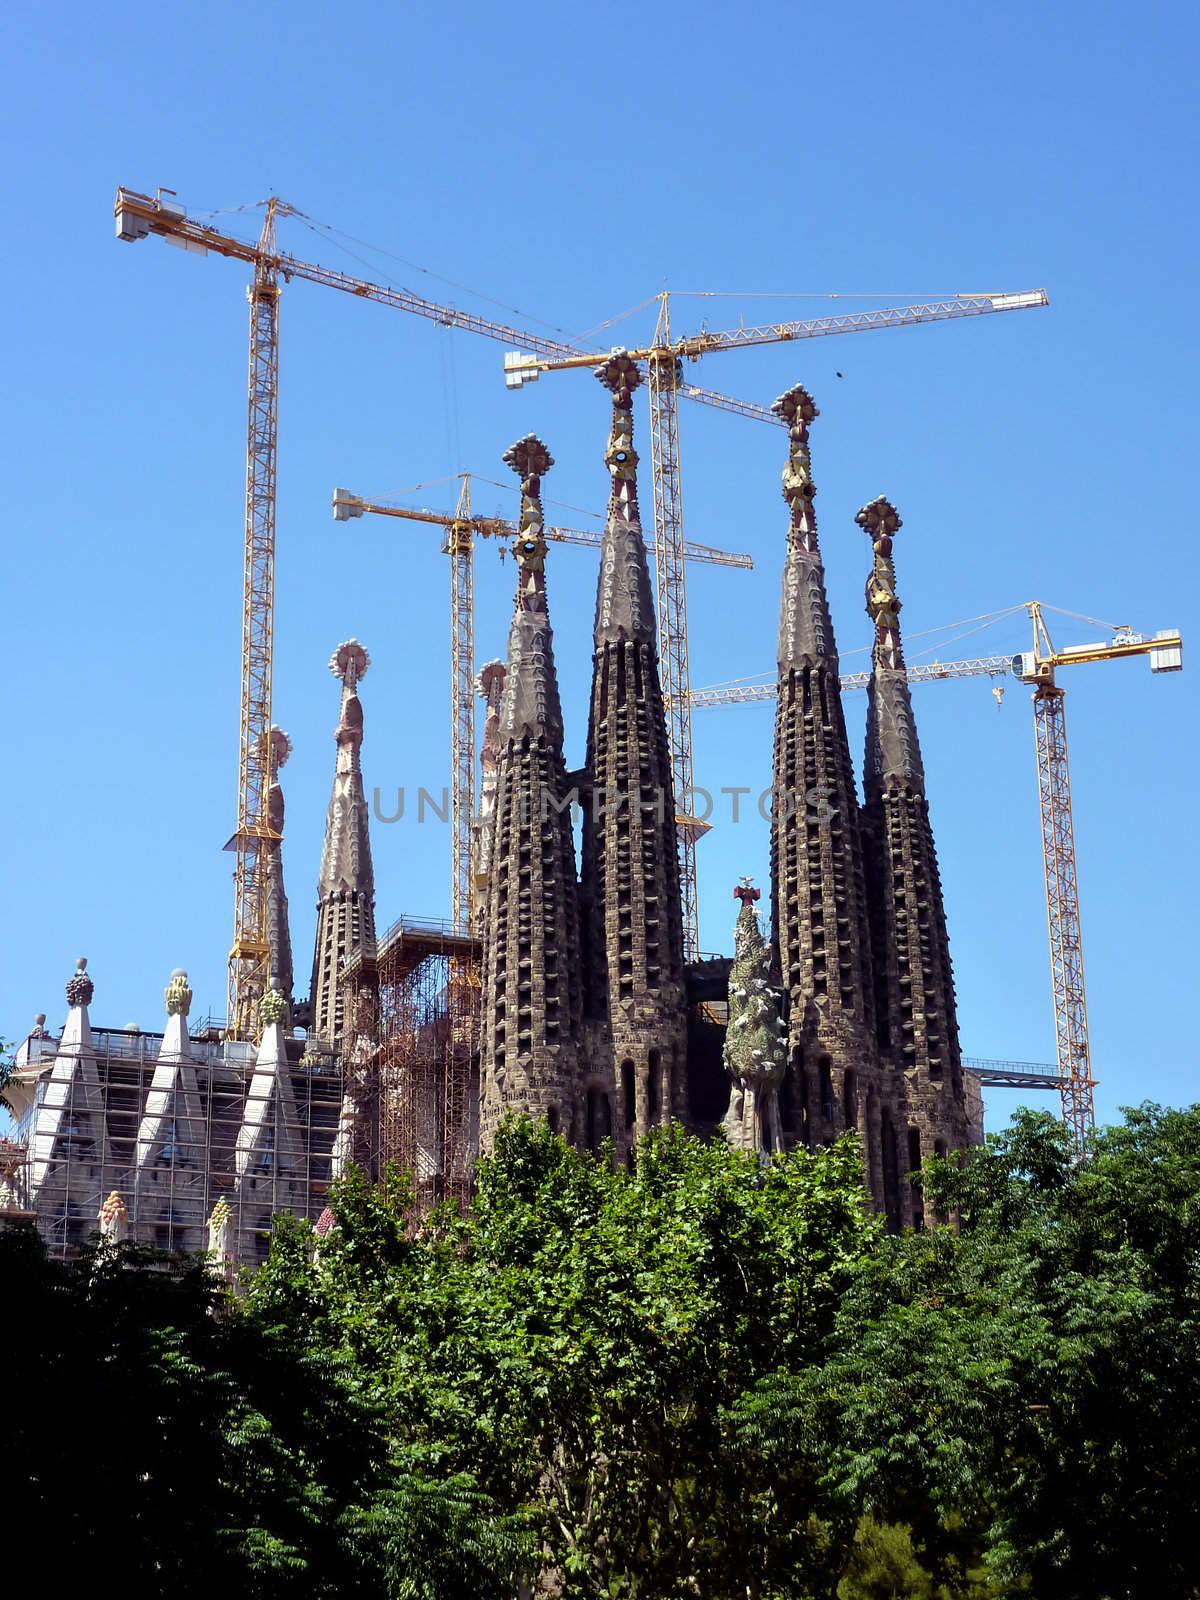 Sagrada familia church in Barcelona, Spain by Elenaphotos21